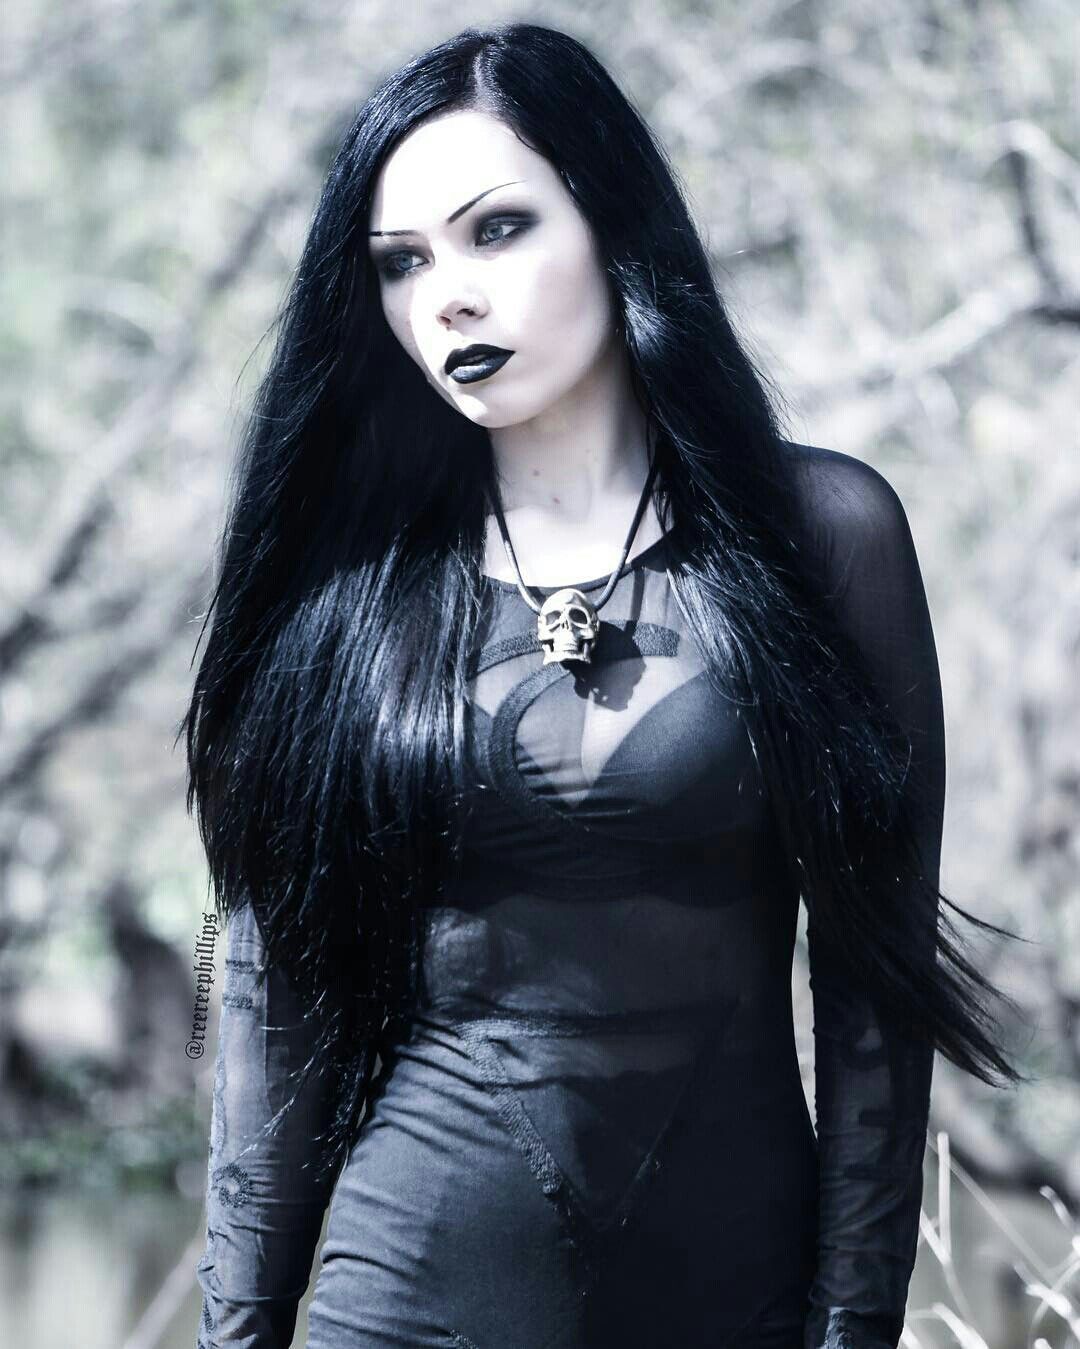 Sexy victorian gothic girl